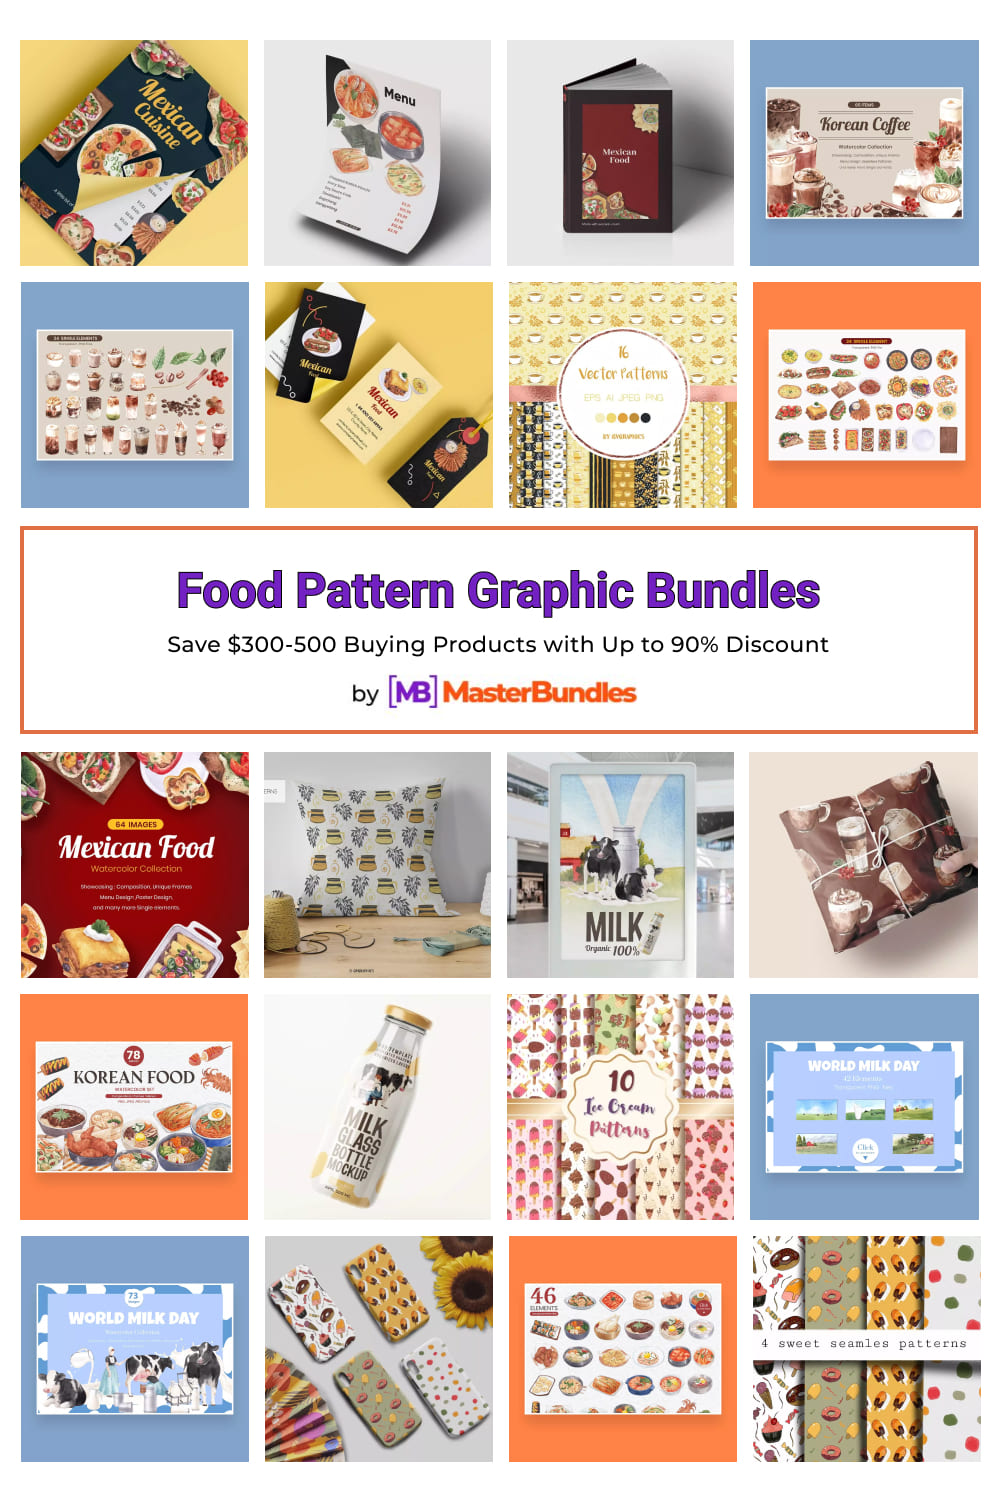 Food Pattern Graphic Bundles Example.